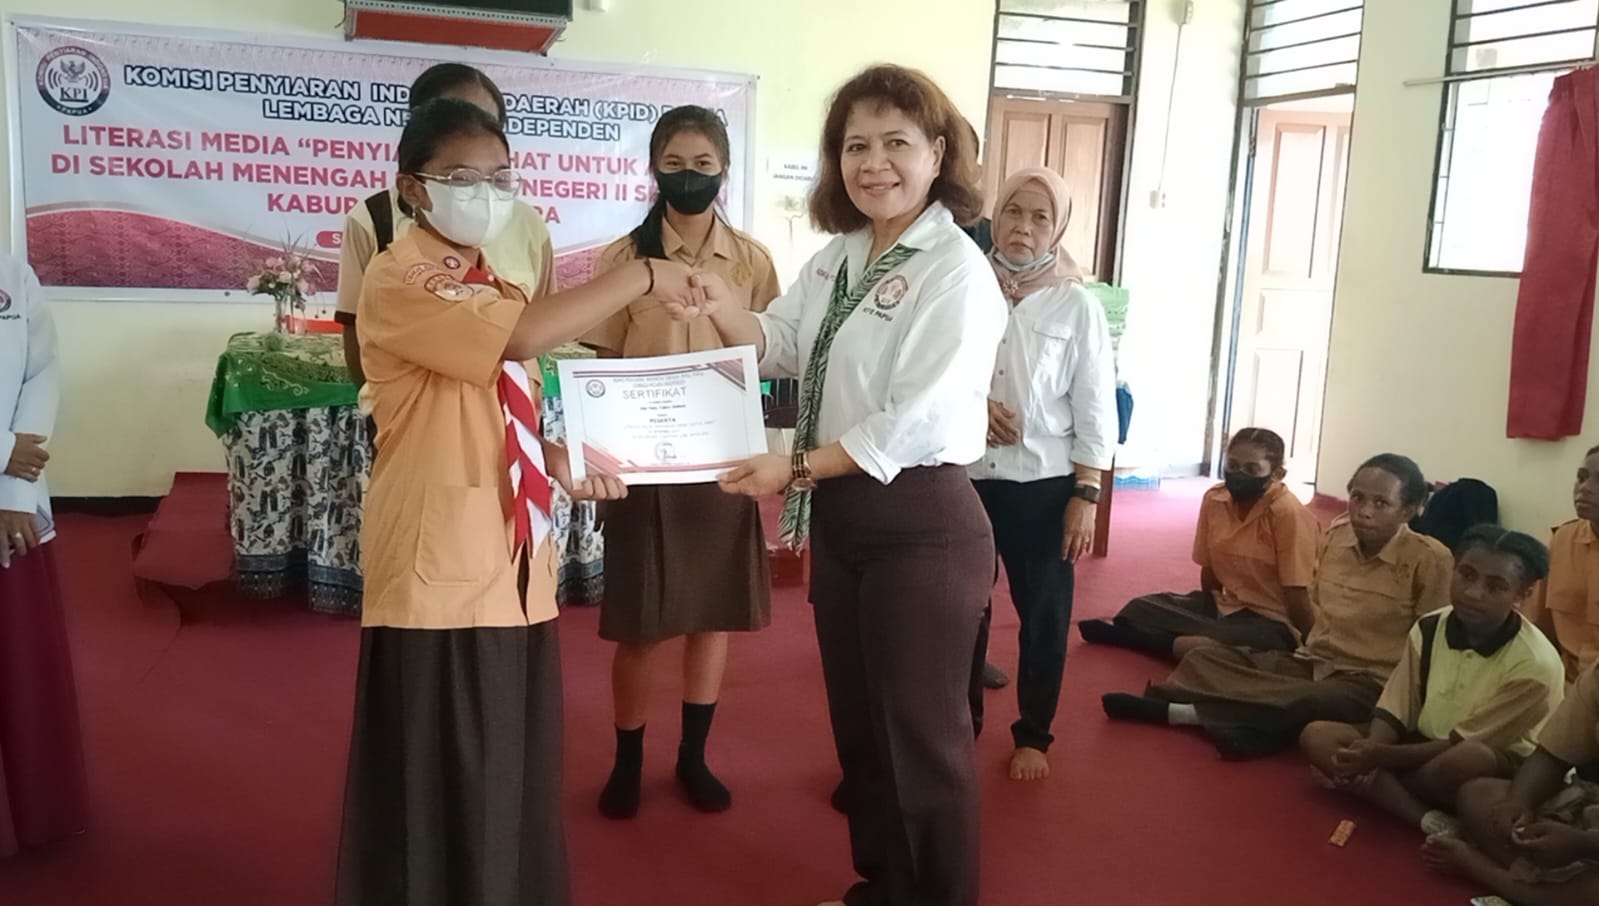 Ketua KPID Papua, Christine Rusni Abaidata ketika menyerahkan sertifikat kepada salah satu perwakilan pelajar, usai kegiatan Literasi Media, di SMPN 2 Sentani